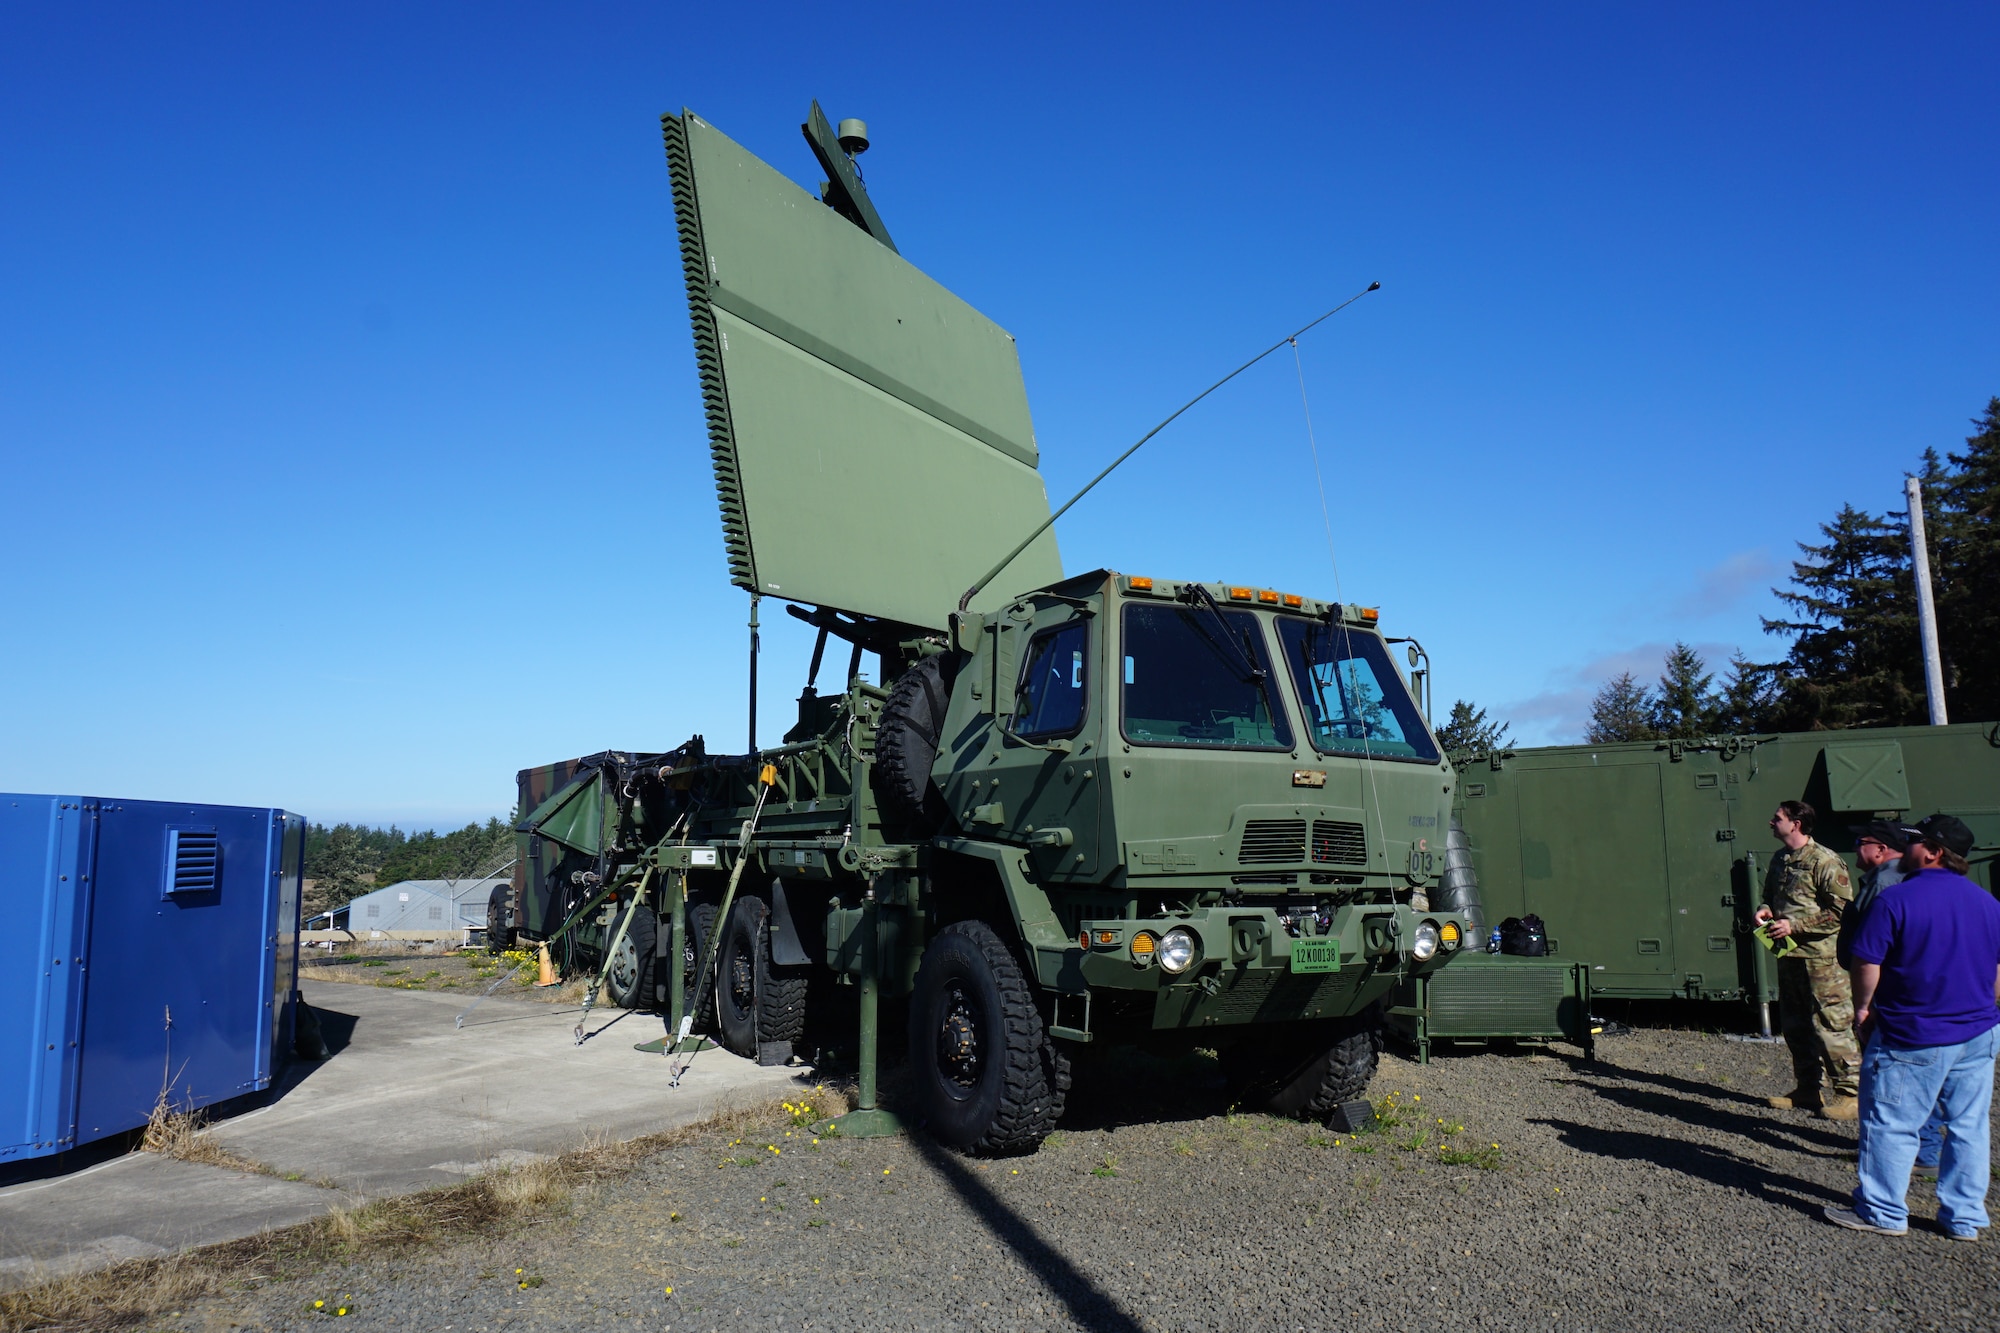 photo of TPS-75 radar on military vehicle